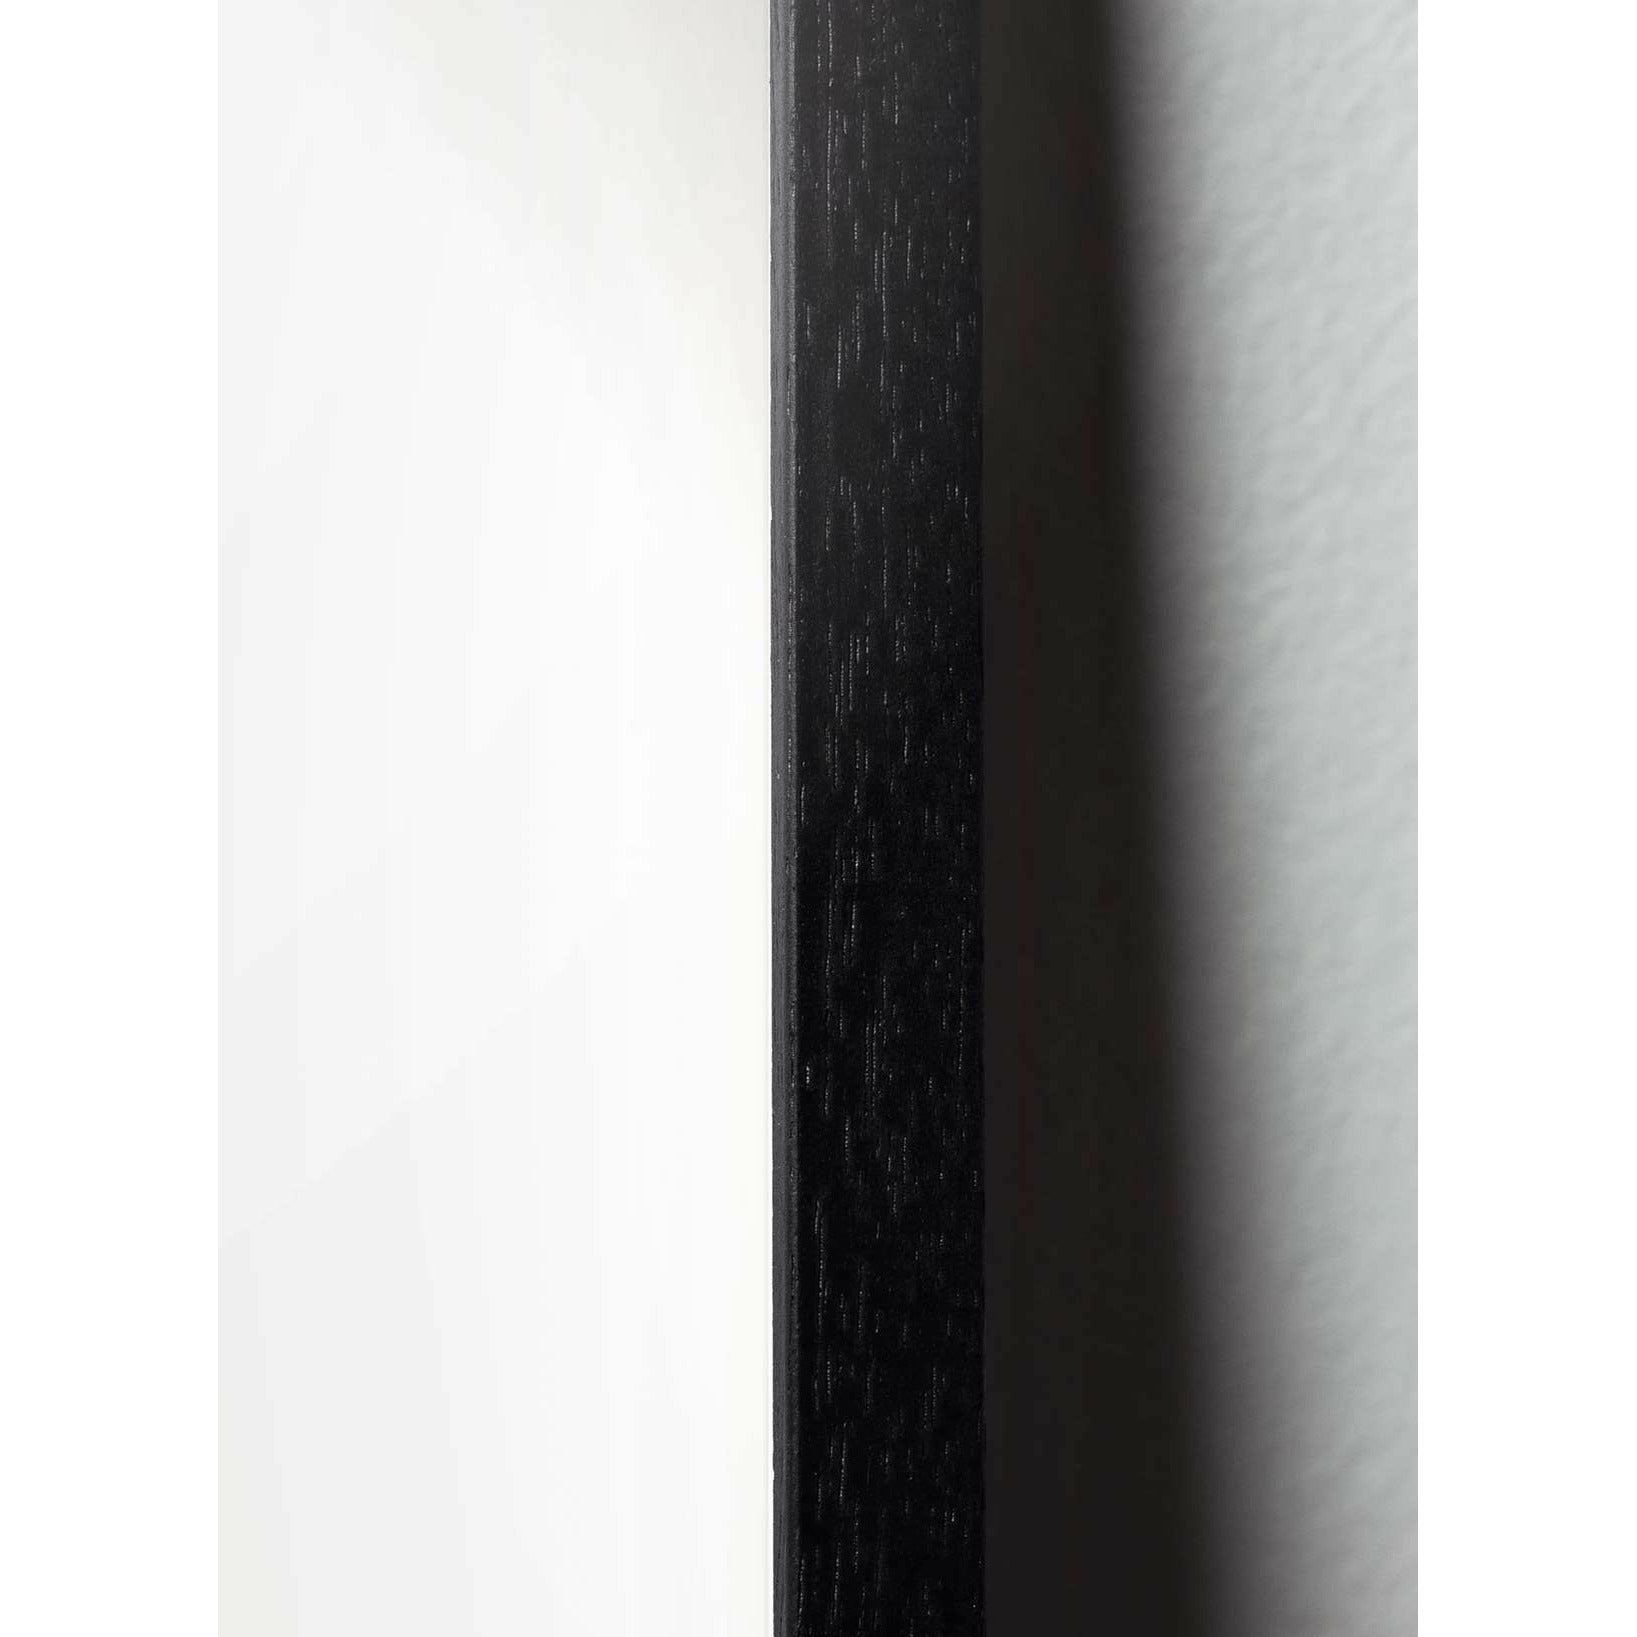 Brainchild Släpp klassisk affisch, ram i svart -målat trä 50x70 cm, mörkblå bakgrund